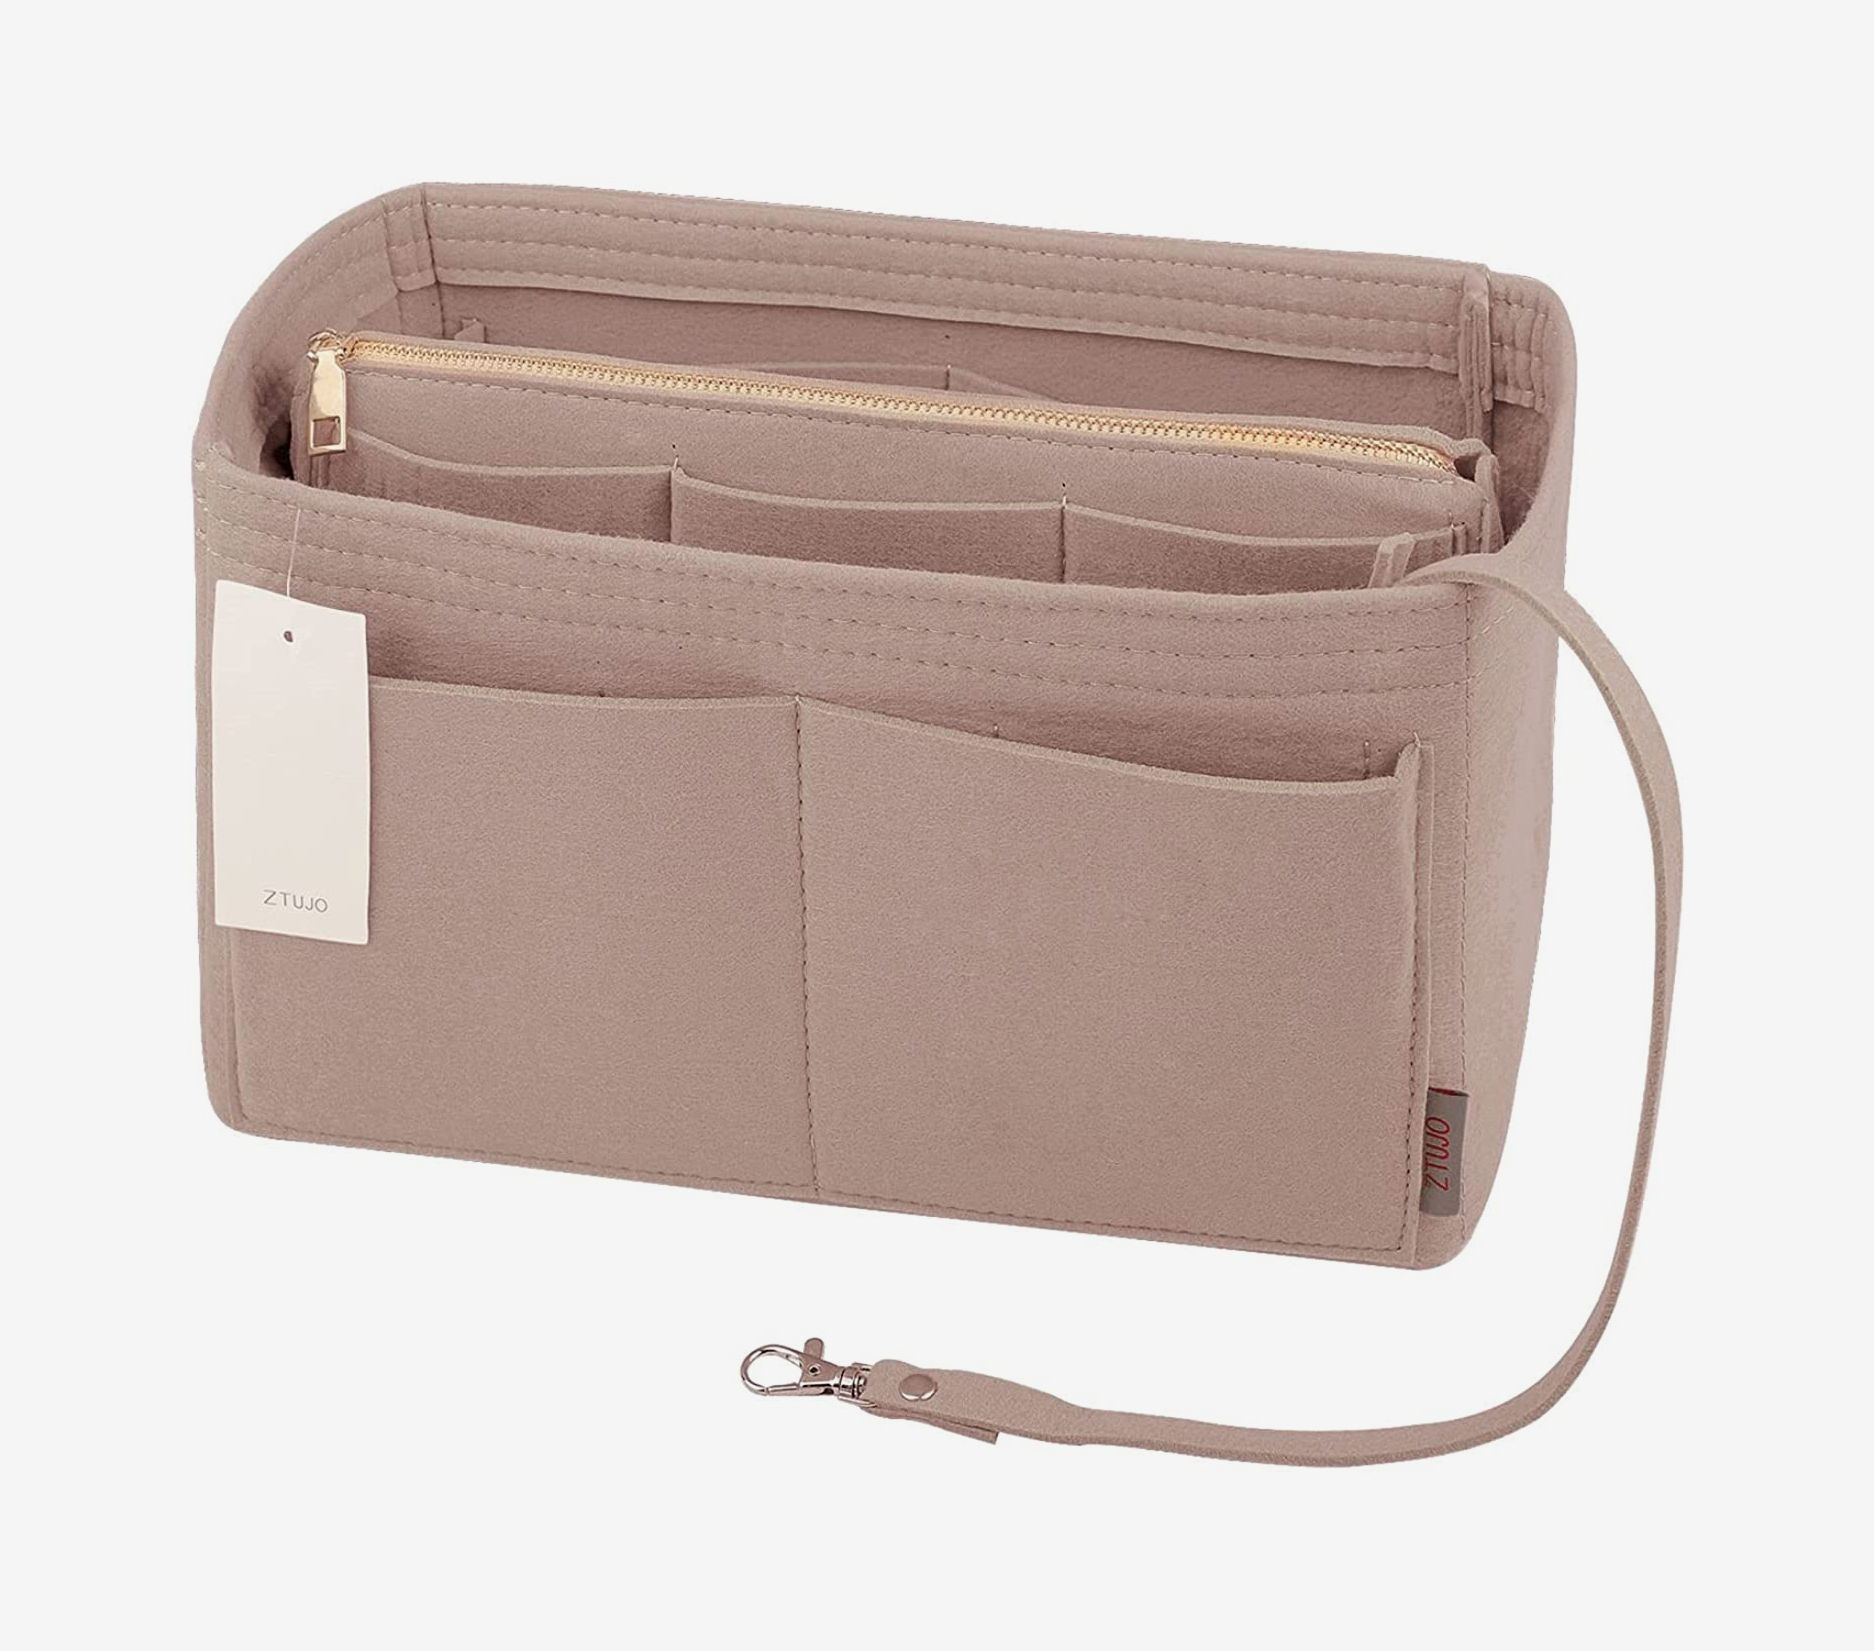 Mini Style Slim Small Felt Purse Organizer Insert Inside Handbag